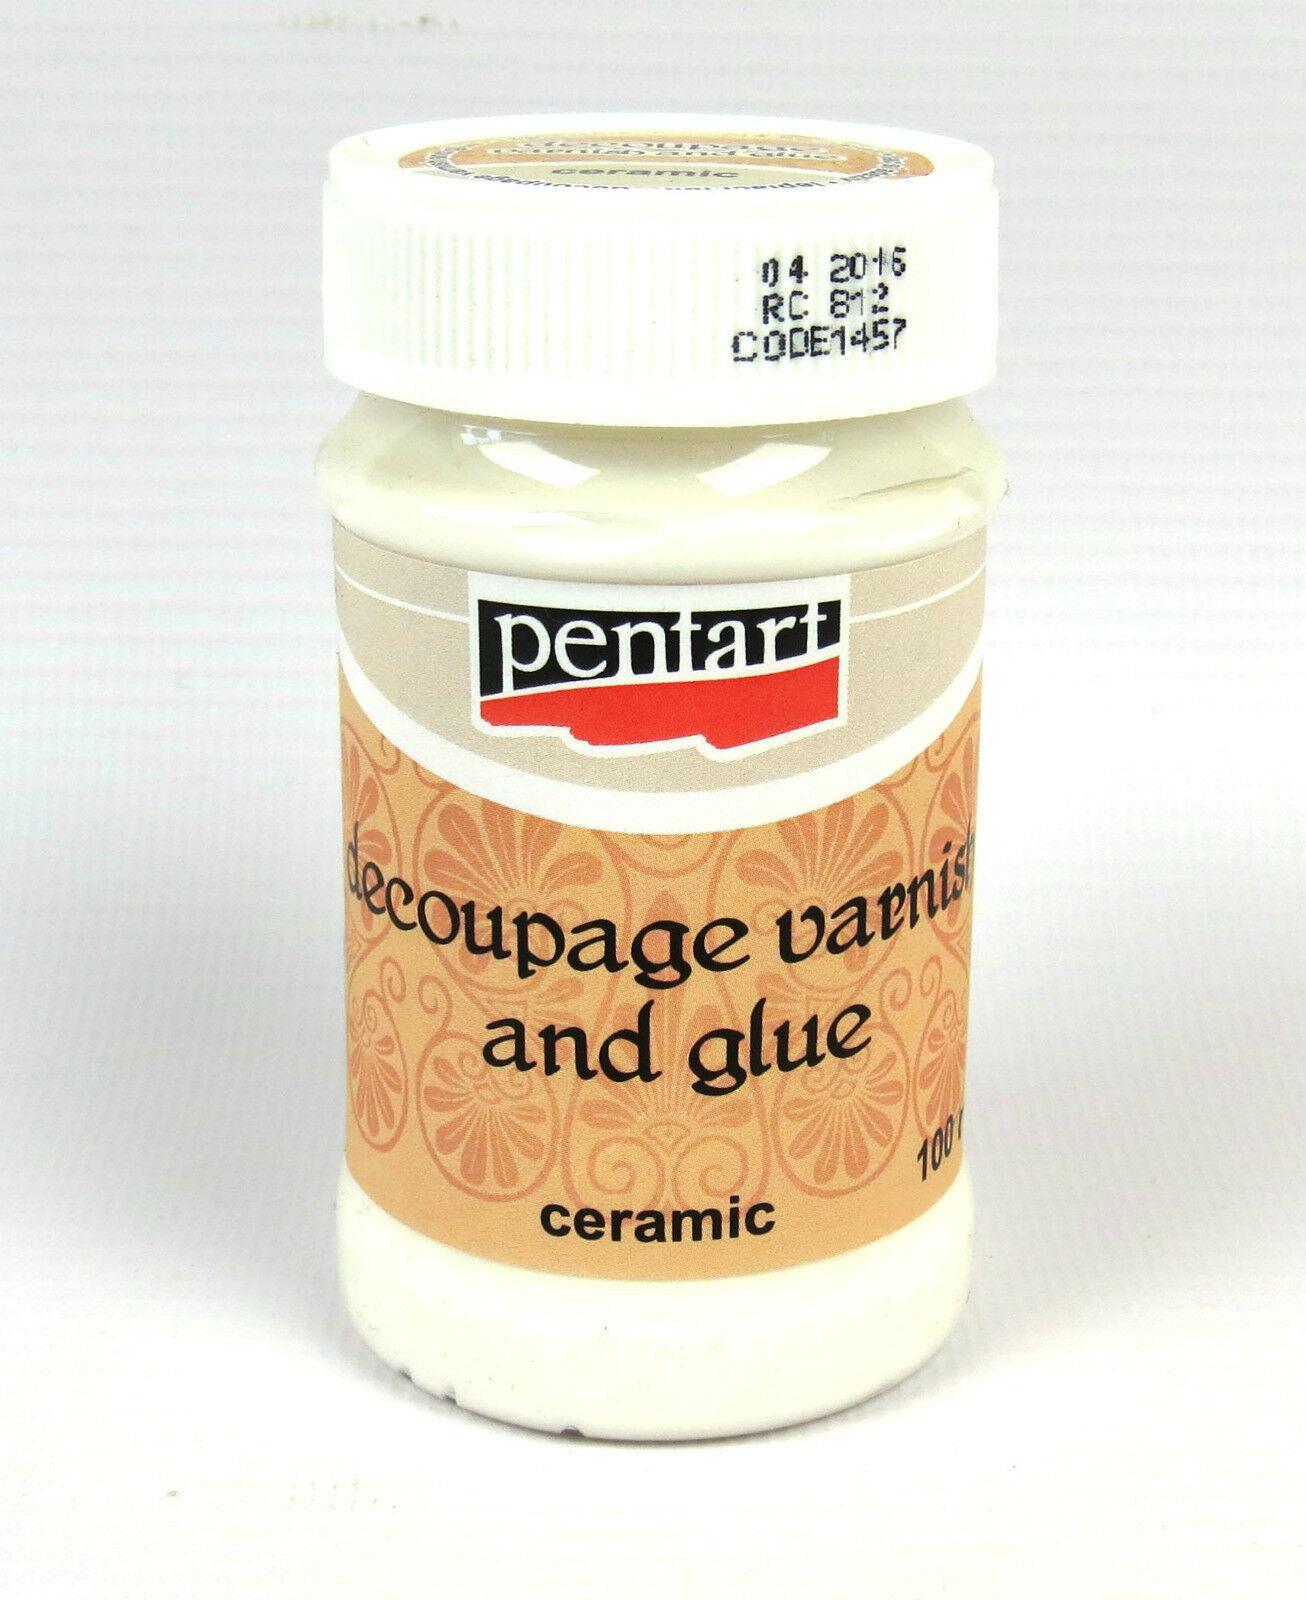 Pentart Decoupage varnish and glue for ceramic 100ml